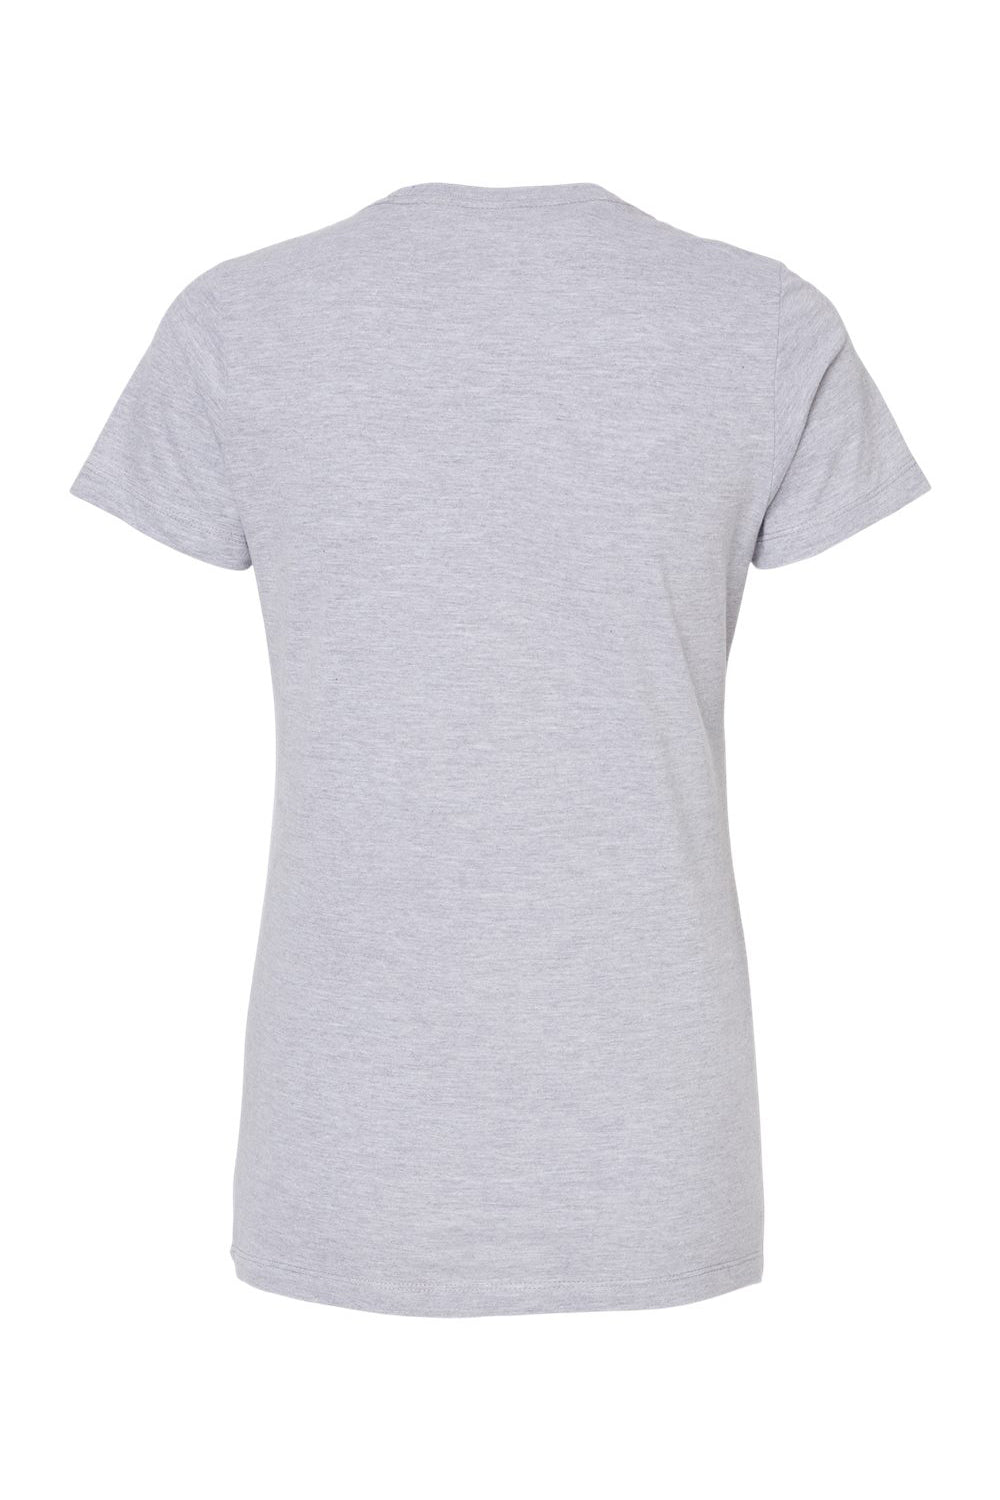 Tultex 516 Womens Premium Short Sleeve Crewneck T-Shirt Heather Grey Flat Back